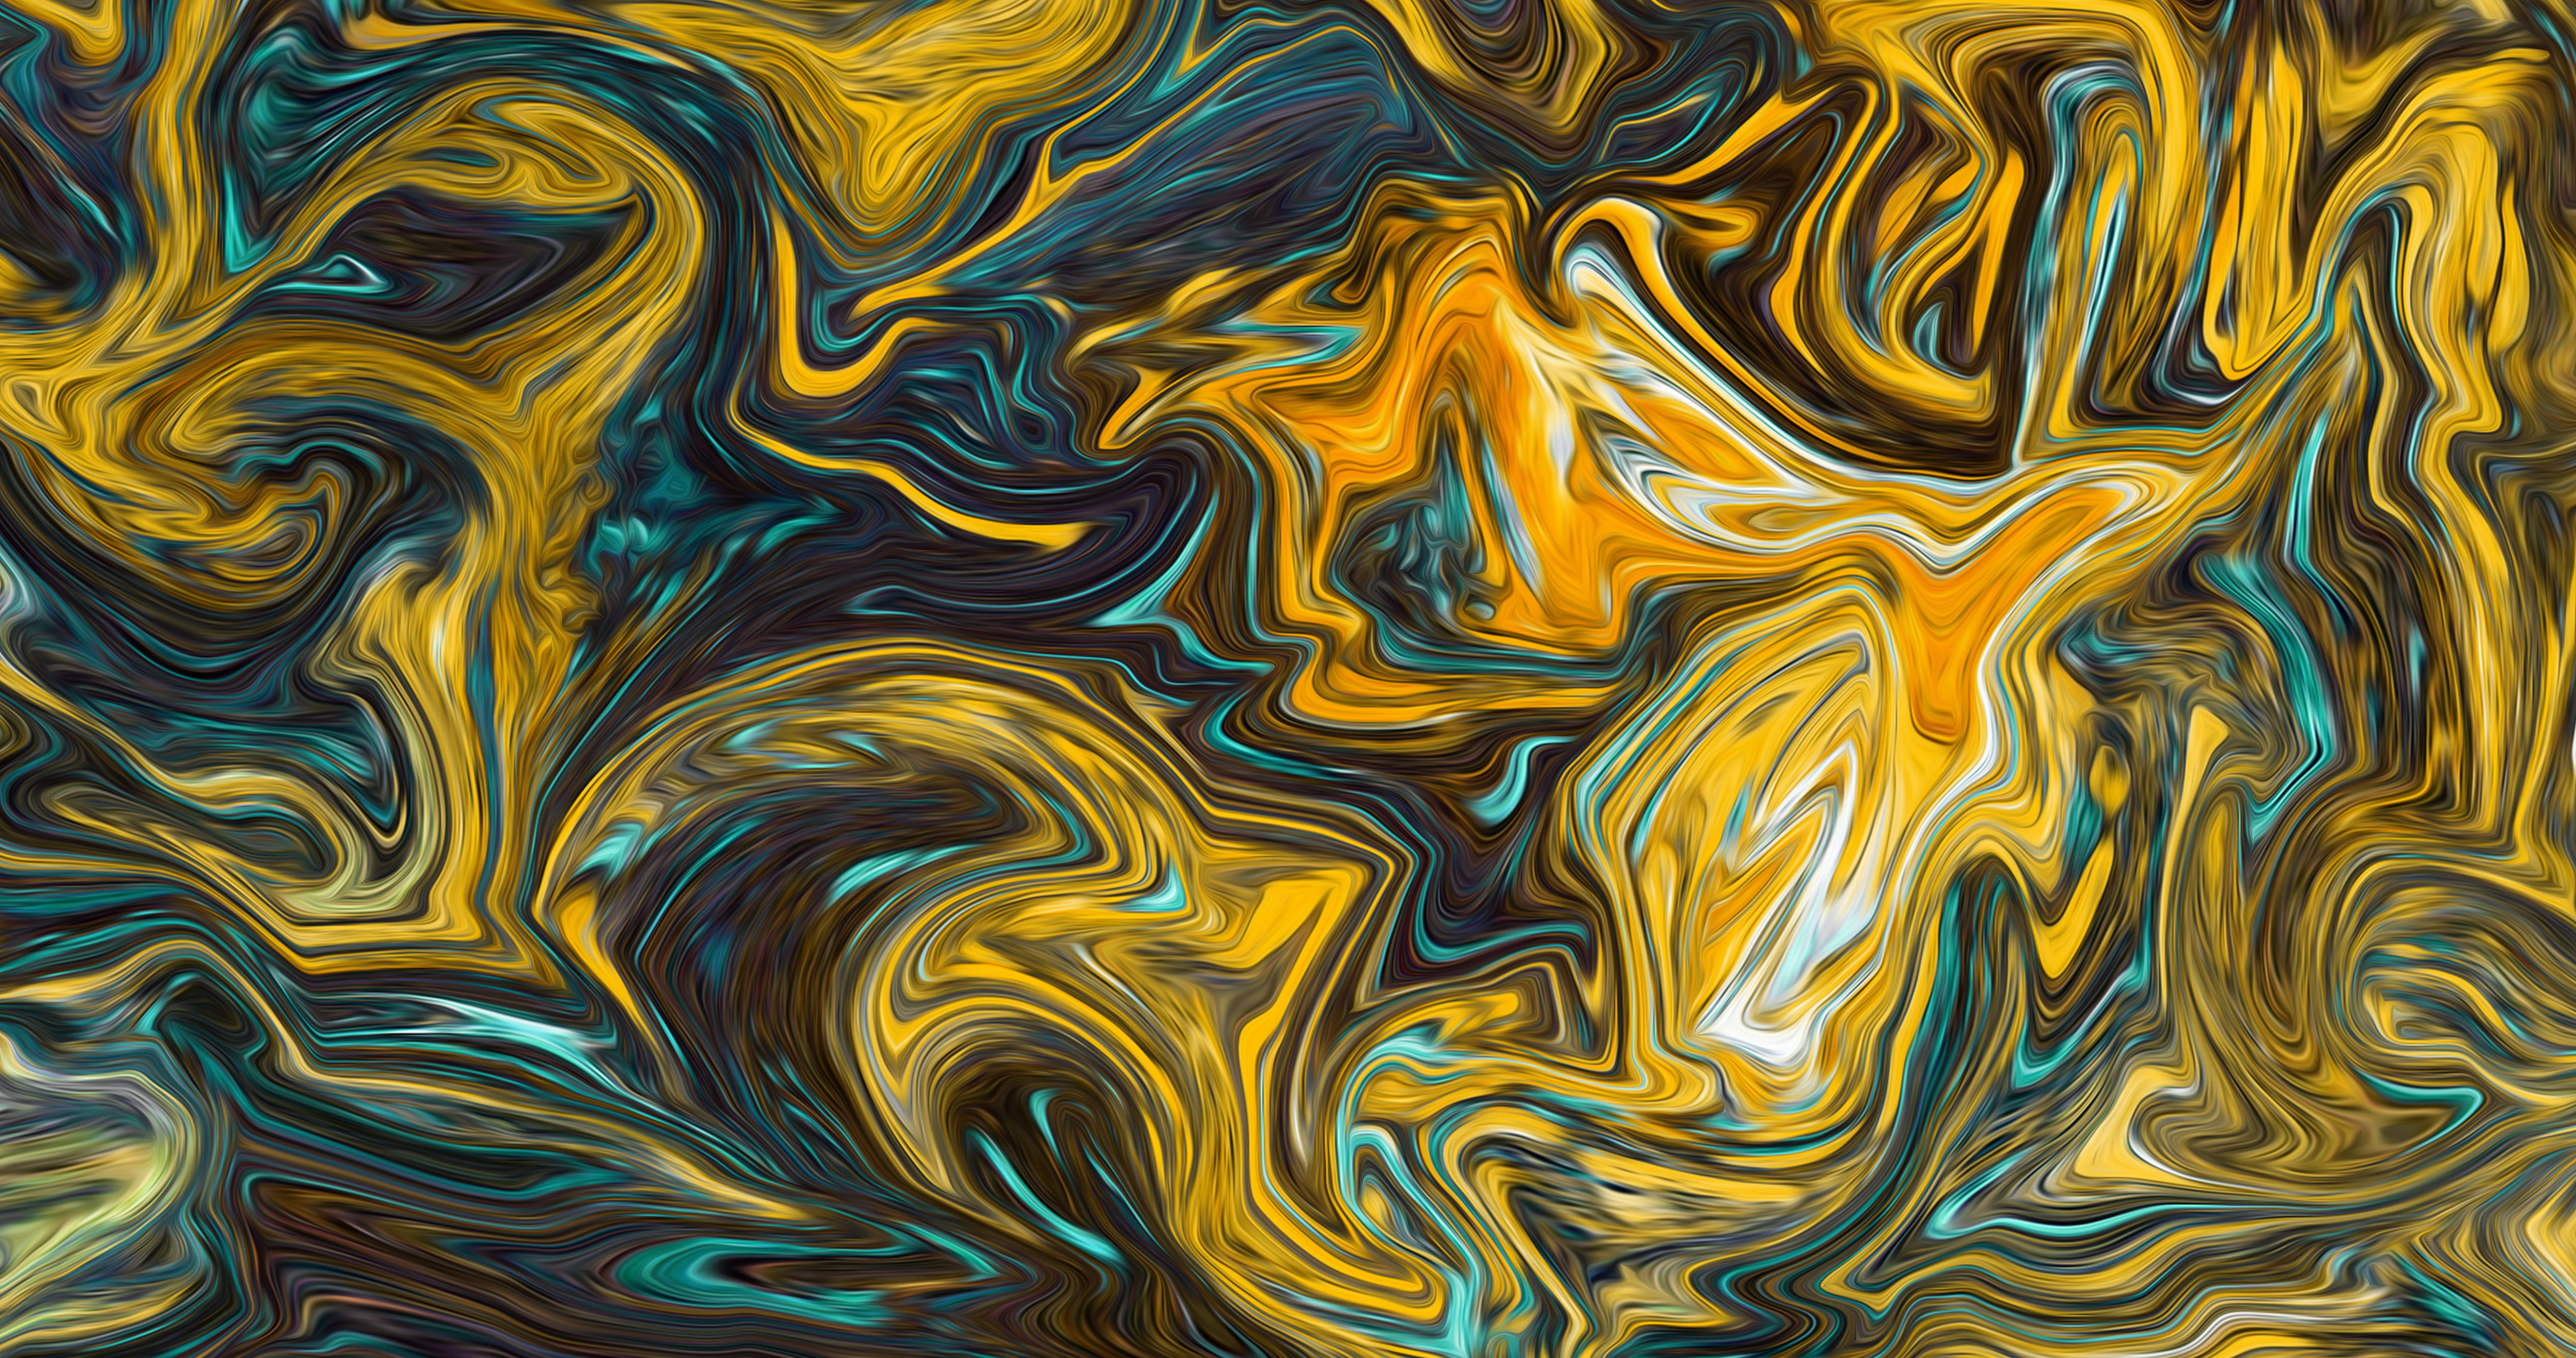 General 4096x2160 abstract fluid liquid colorful artwork ArtStation brush paint brushes yellow shapes XEBELION digital art